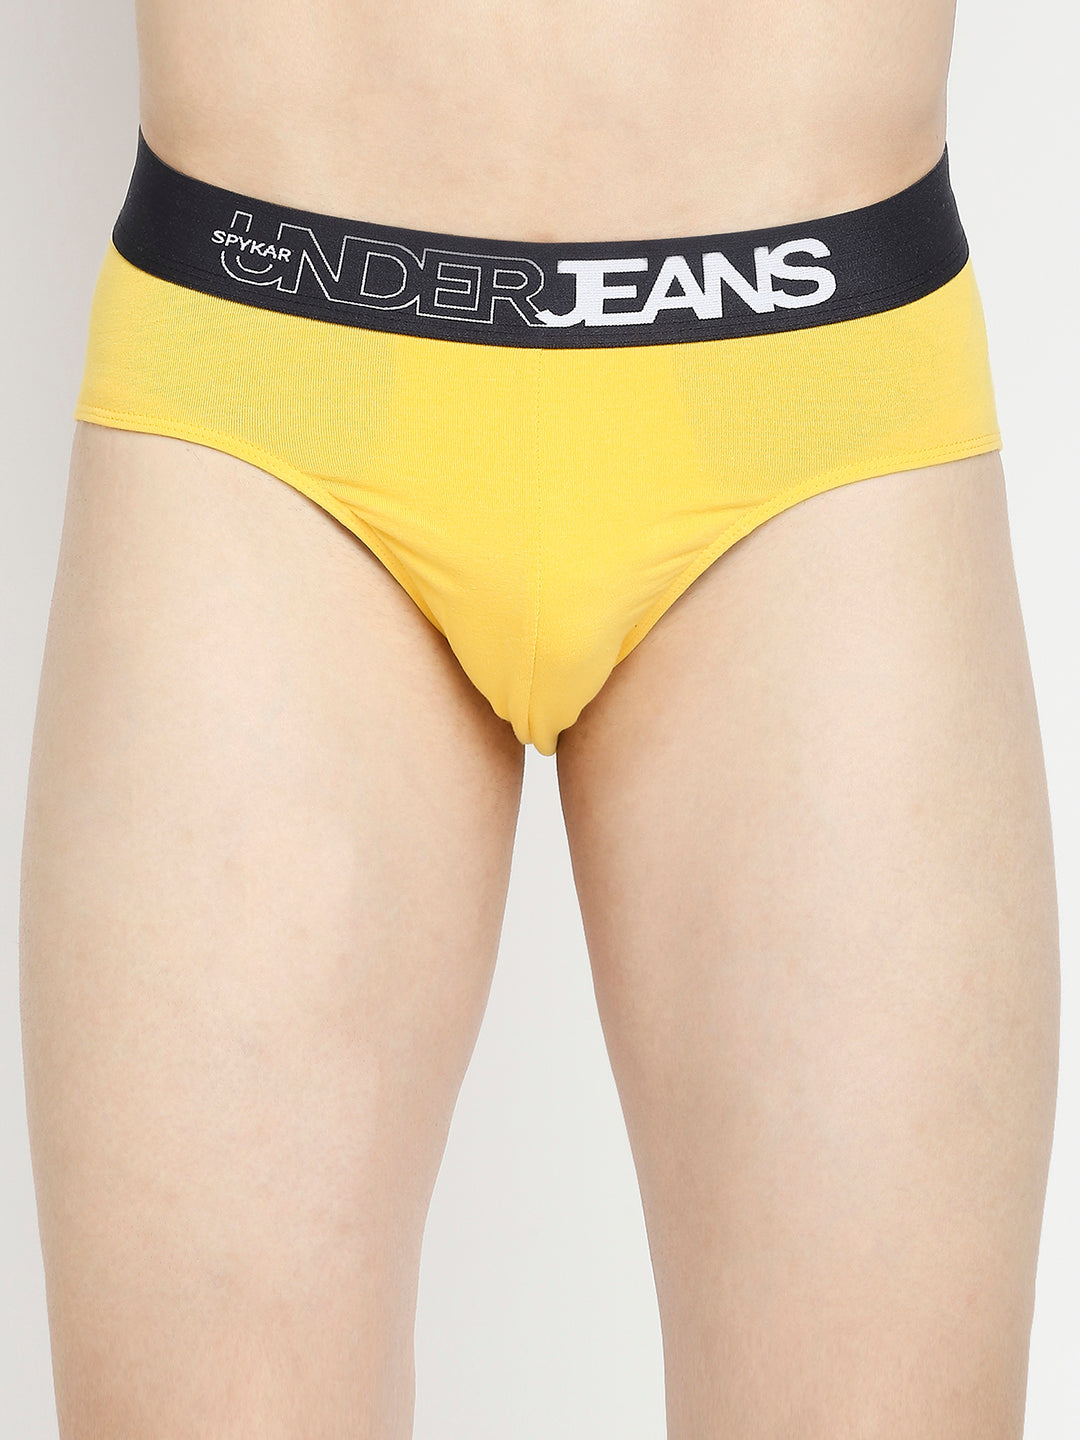 Men Premium Yellow & Black Cotton Blend Brief - Pack Of 2- UnderJeans by Spykar